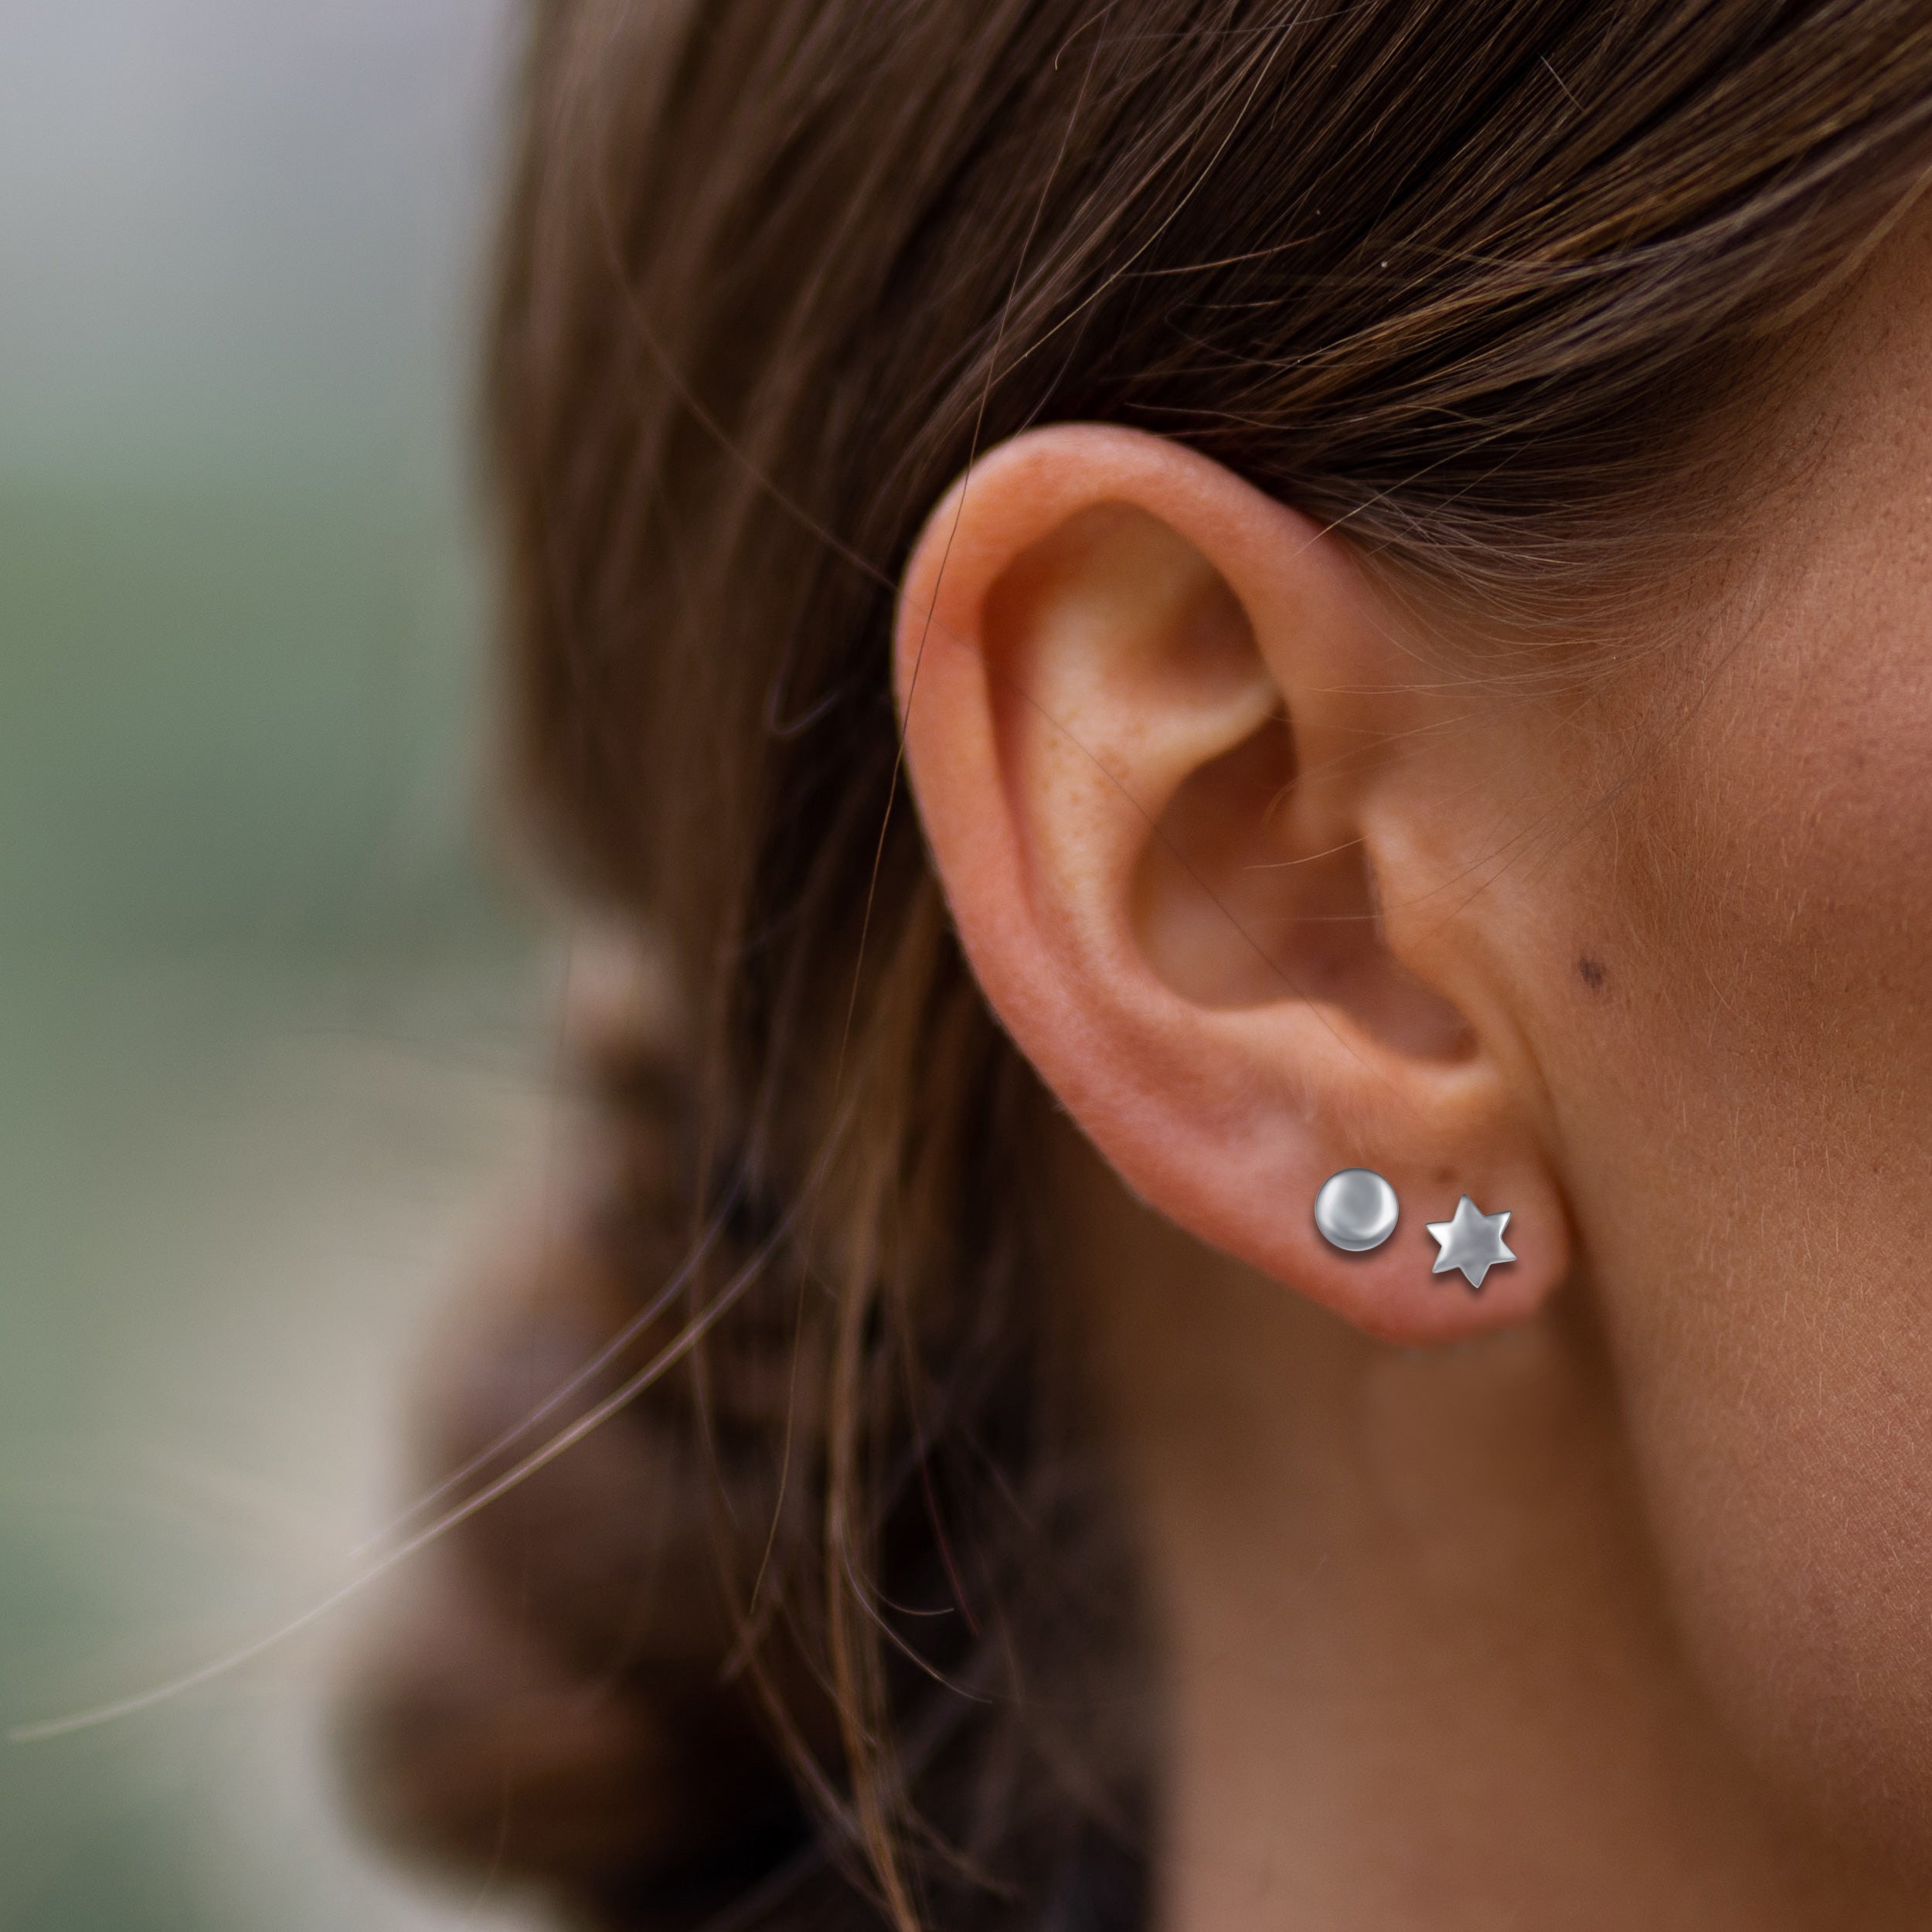 Silver stud earrings designs for girls l Silver earrings design l Beautiful  earrings for female l - YouTube